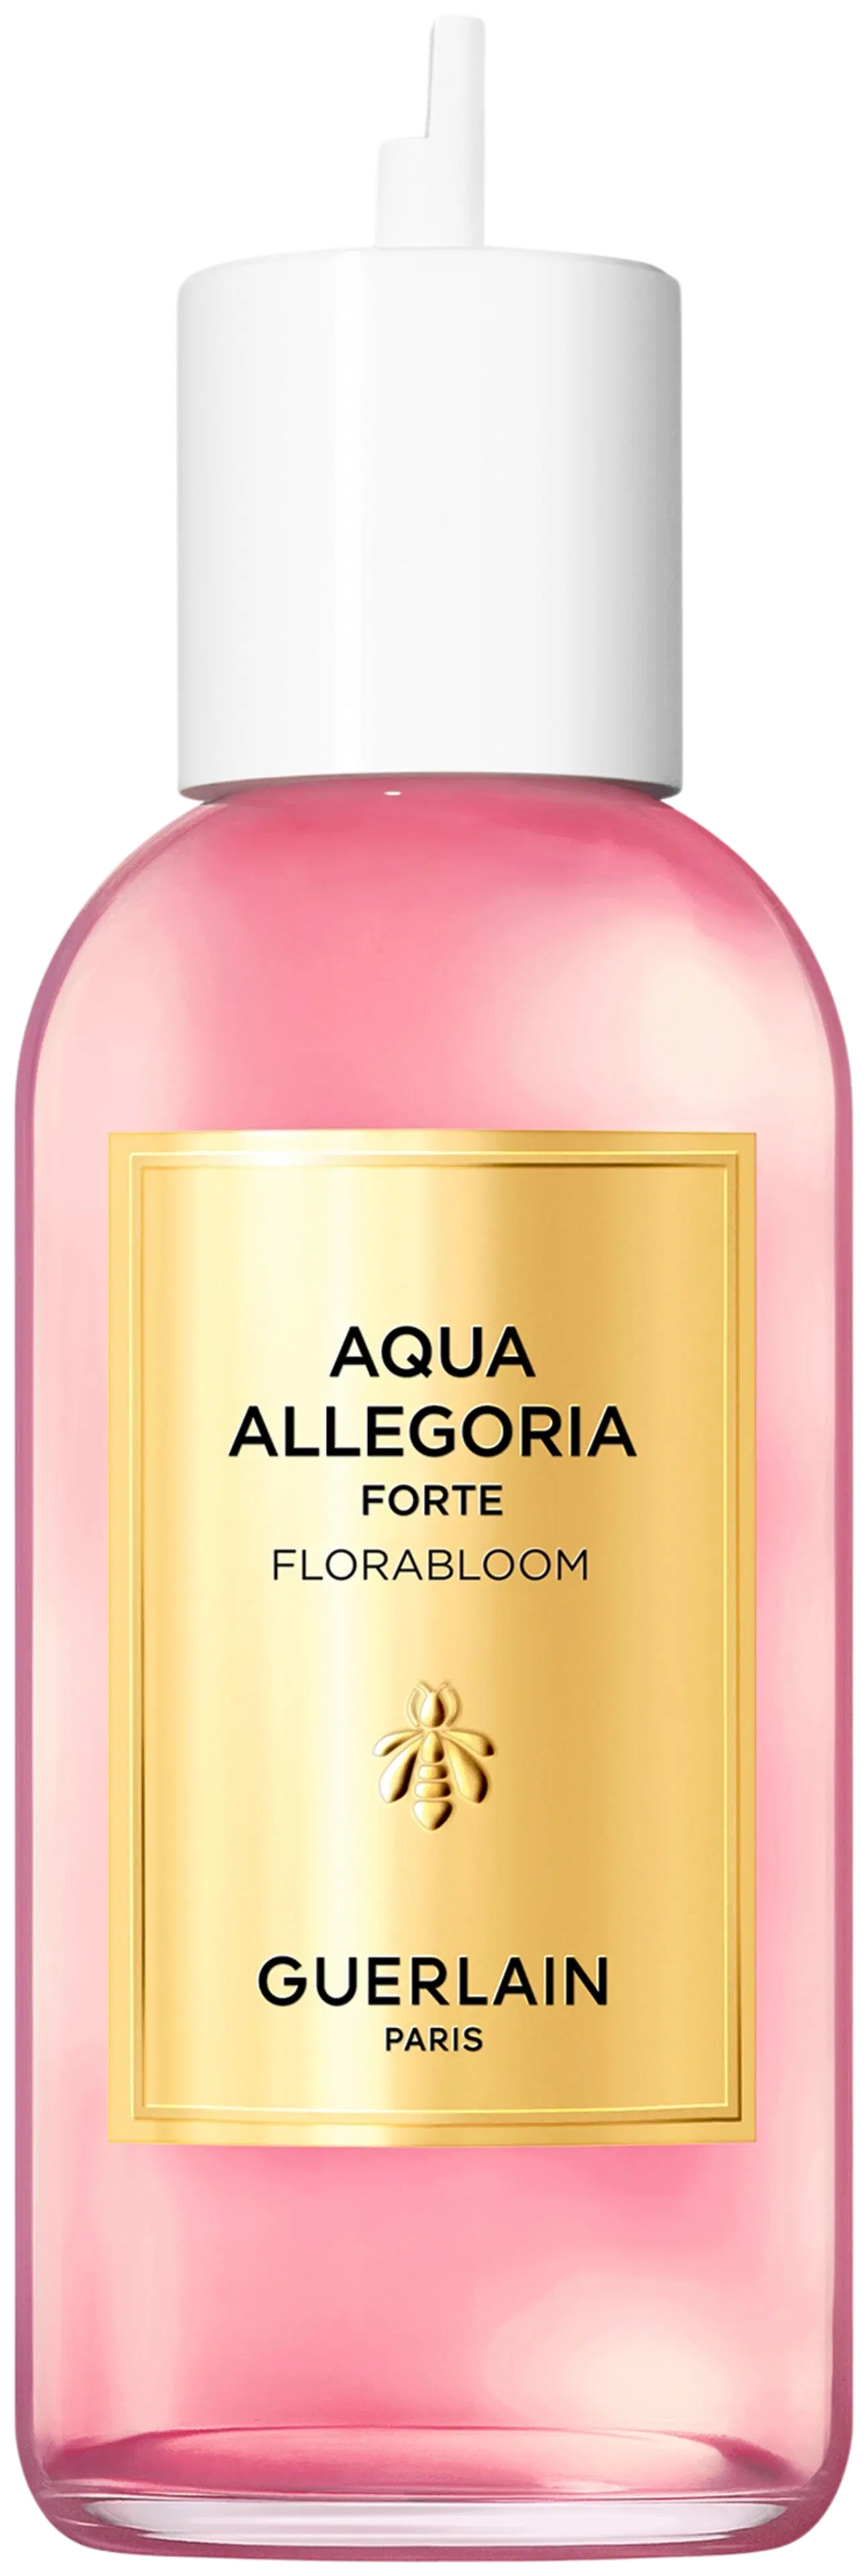 Guerlain Aqua Allegoria Florabloom Forte Eau de Parfum 200 ml Refill